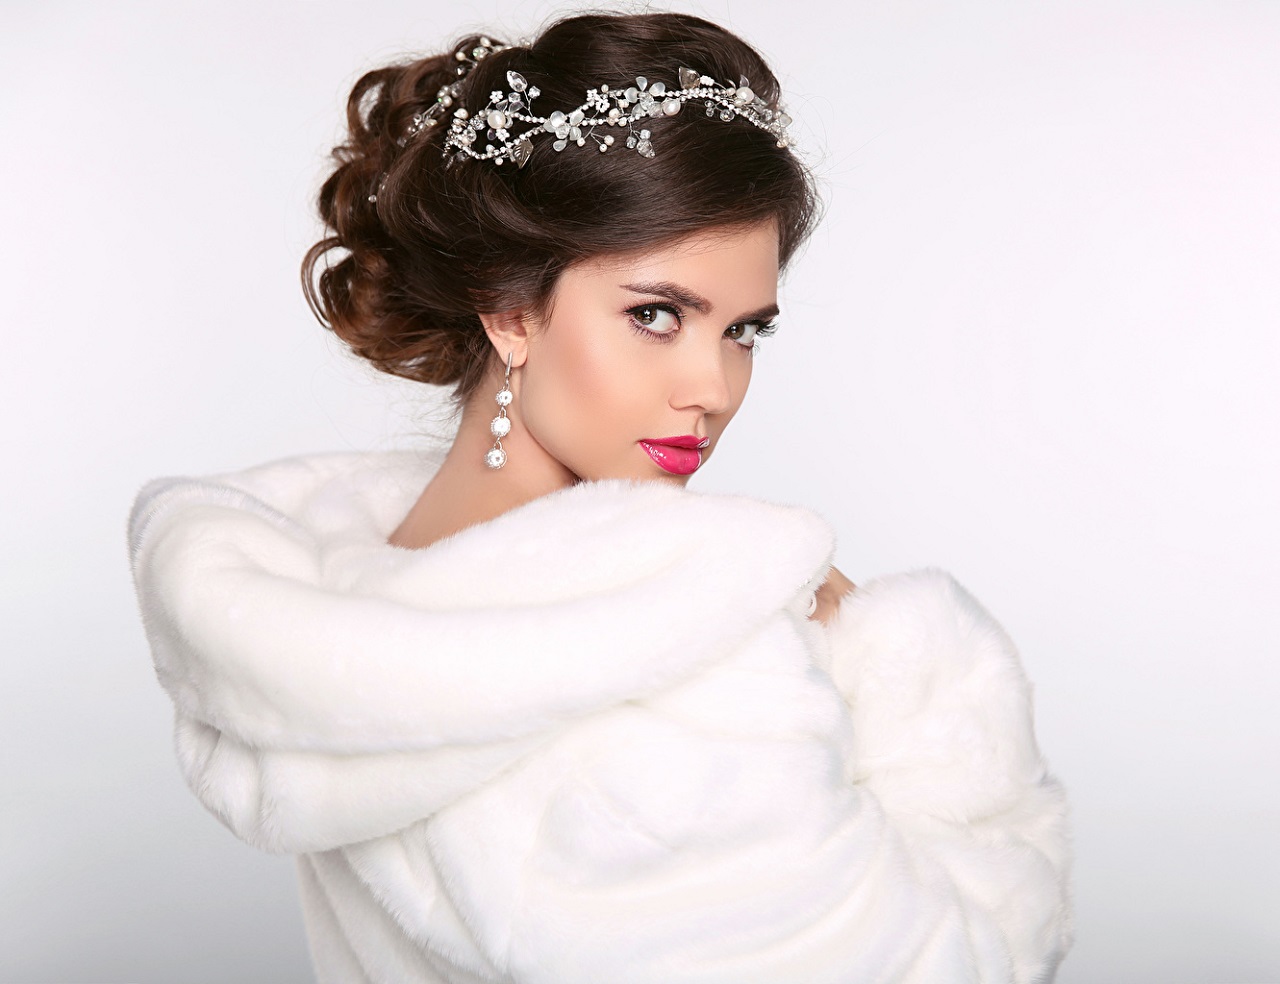 Model Brunette Women Long Hair Fur Coats Coats White Coat Tied Hair Pink Lipstick Fur Hair Ornament 1280x984